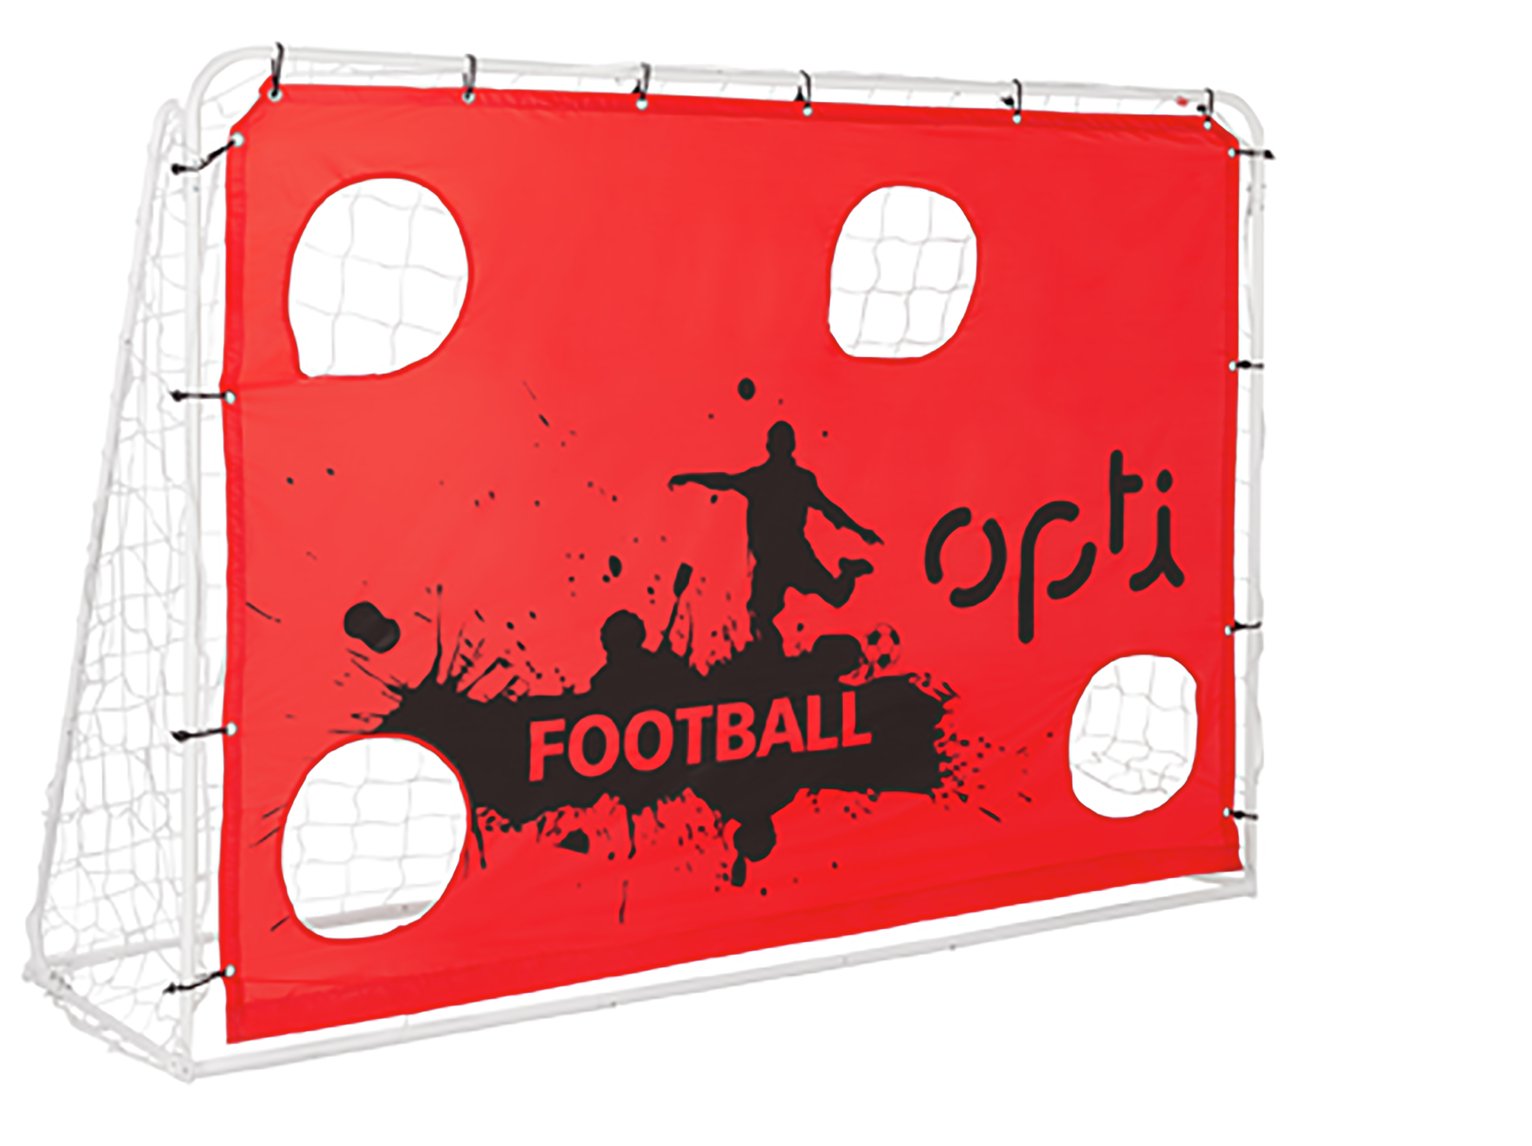 Opti 7 x 5ft Football Training Target Goal and Rebounder